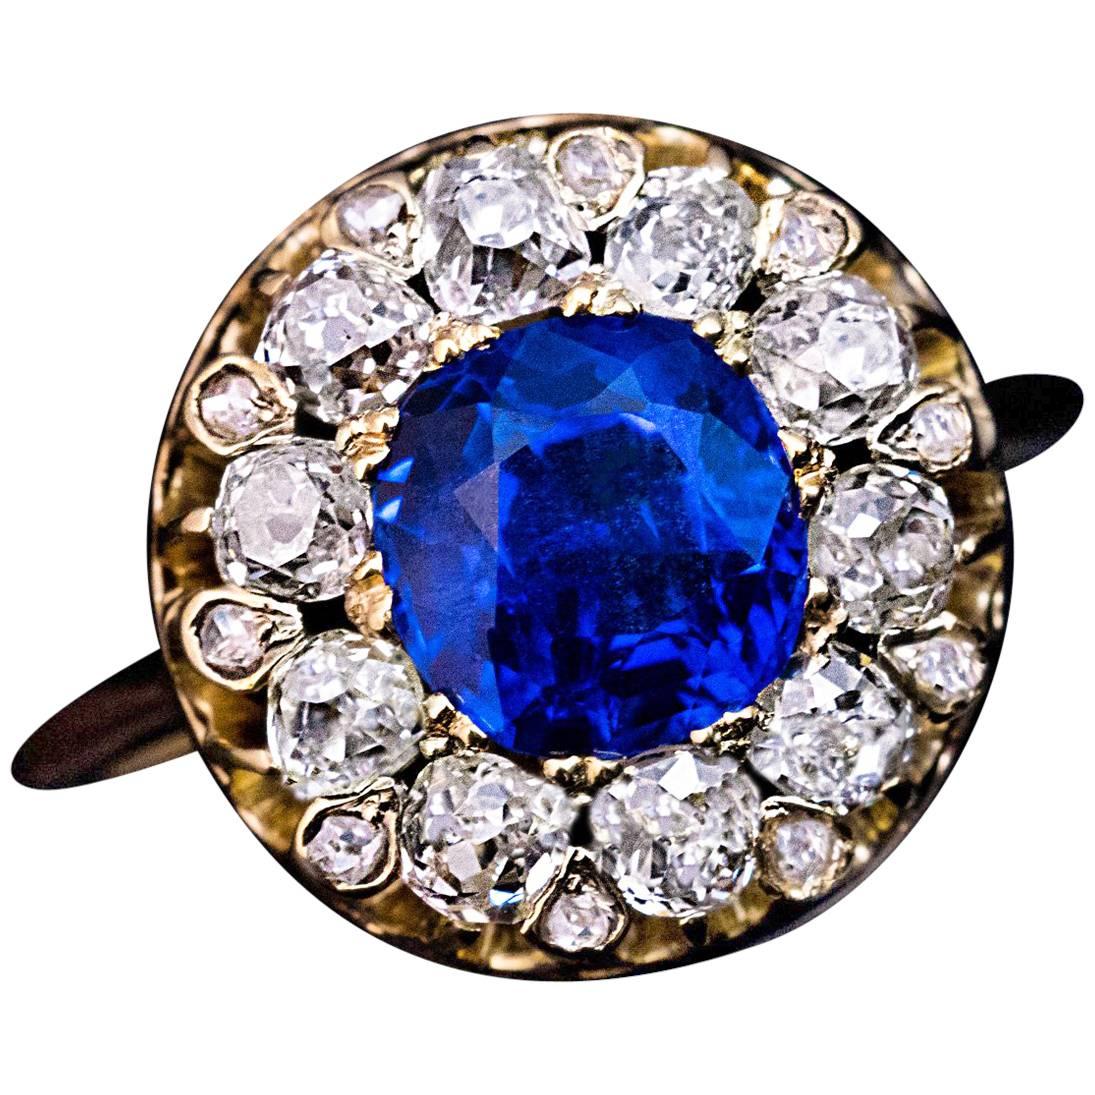 Antique 19th Century Burmese Sapphire Diamond Engagement Ring